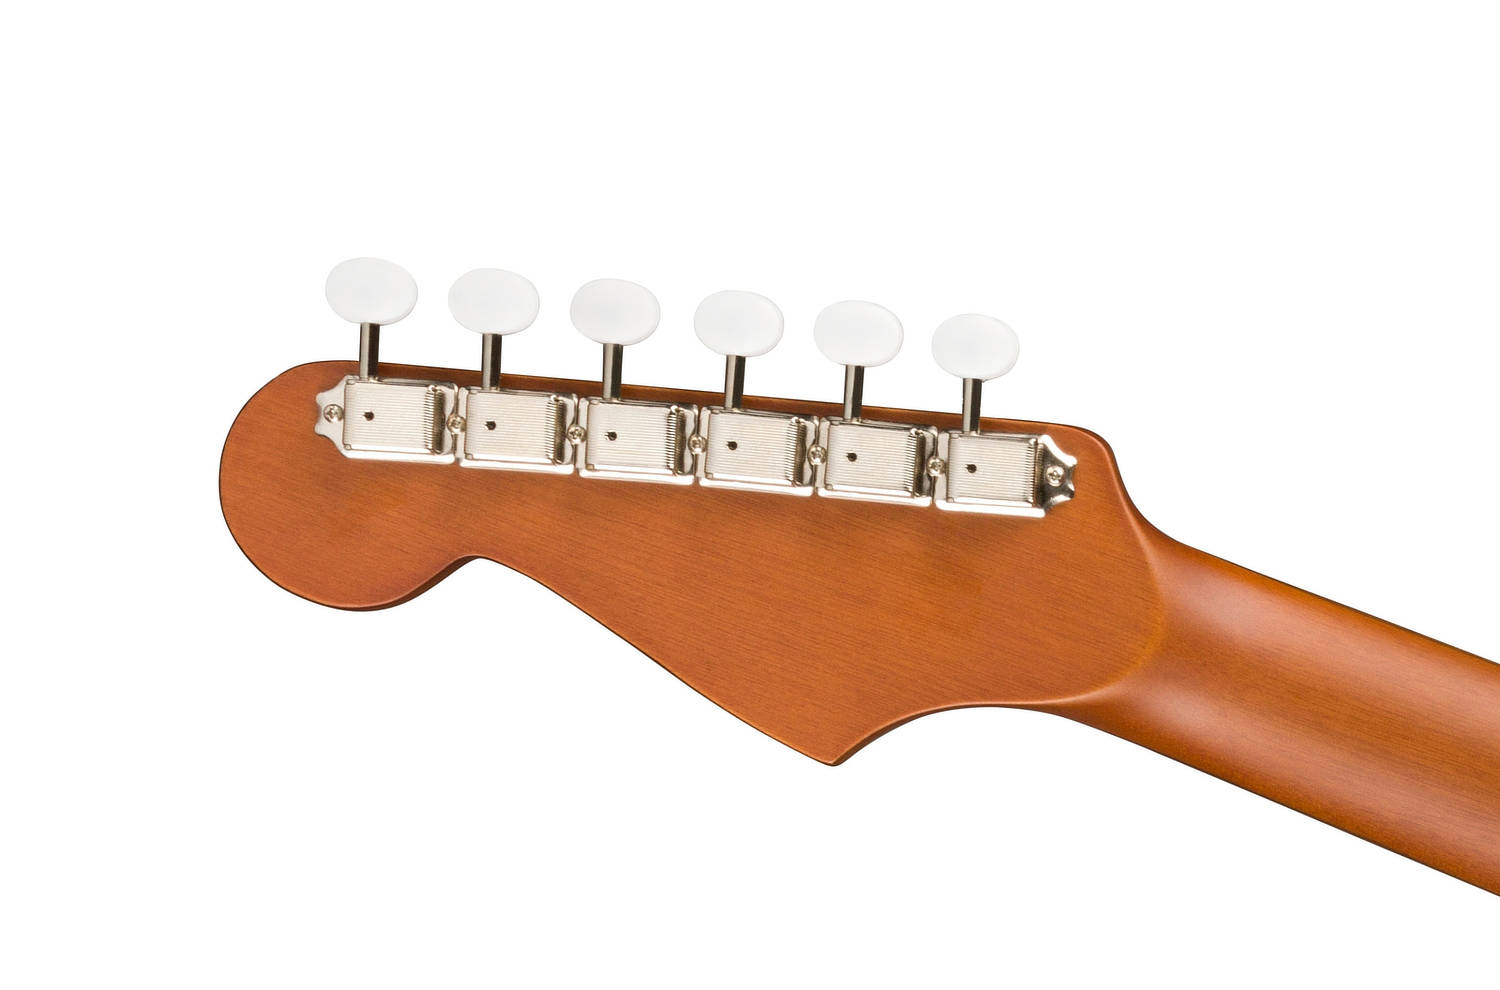 Fender Redondo Mini Acoustic Guitar